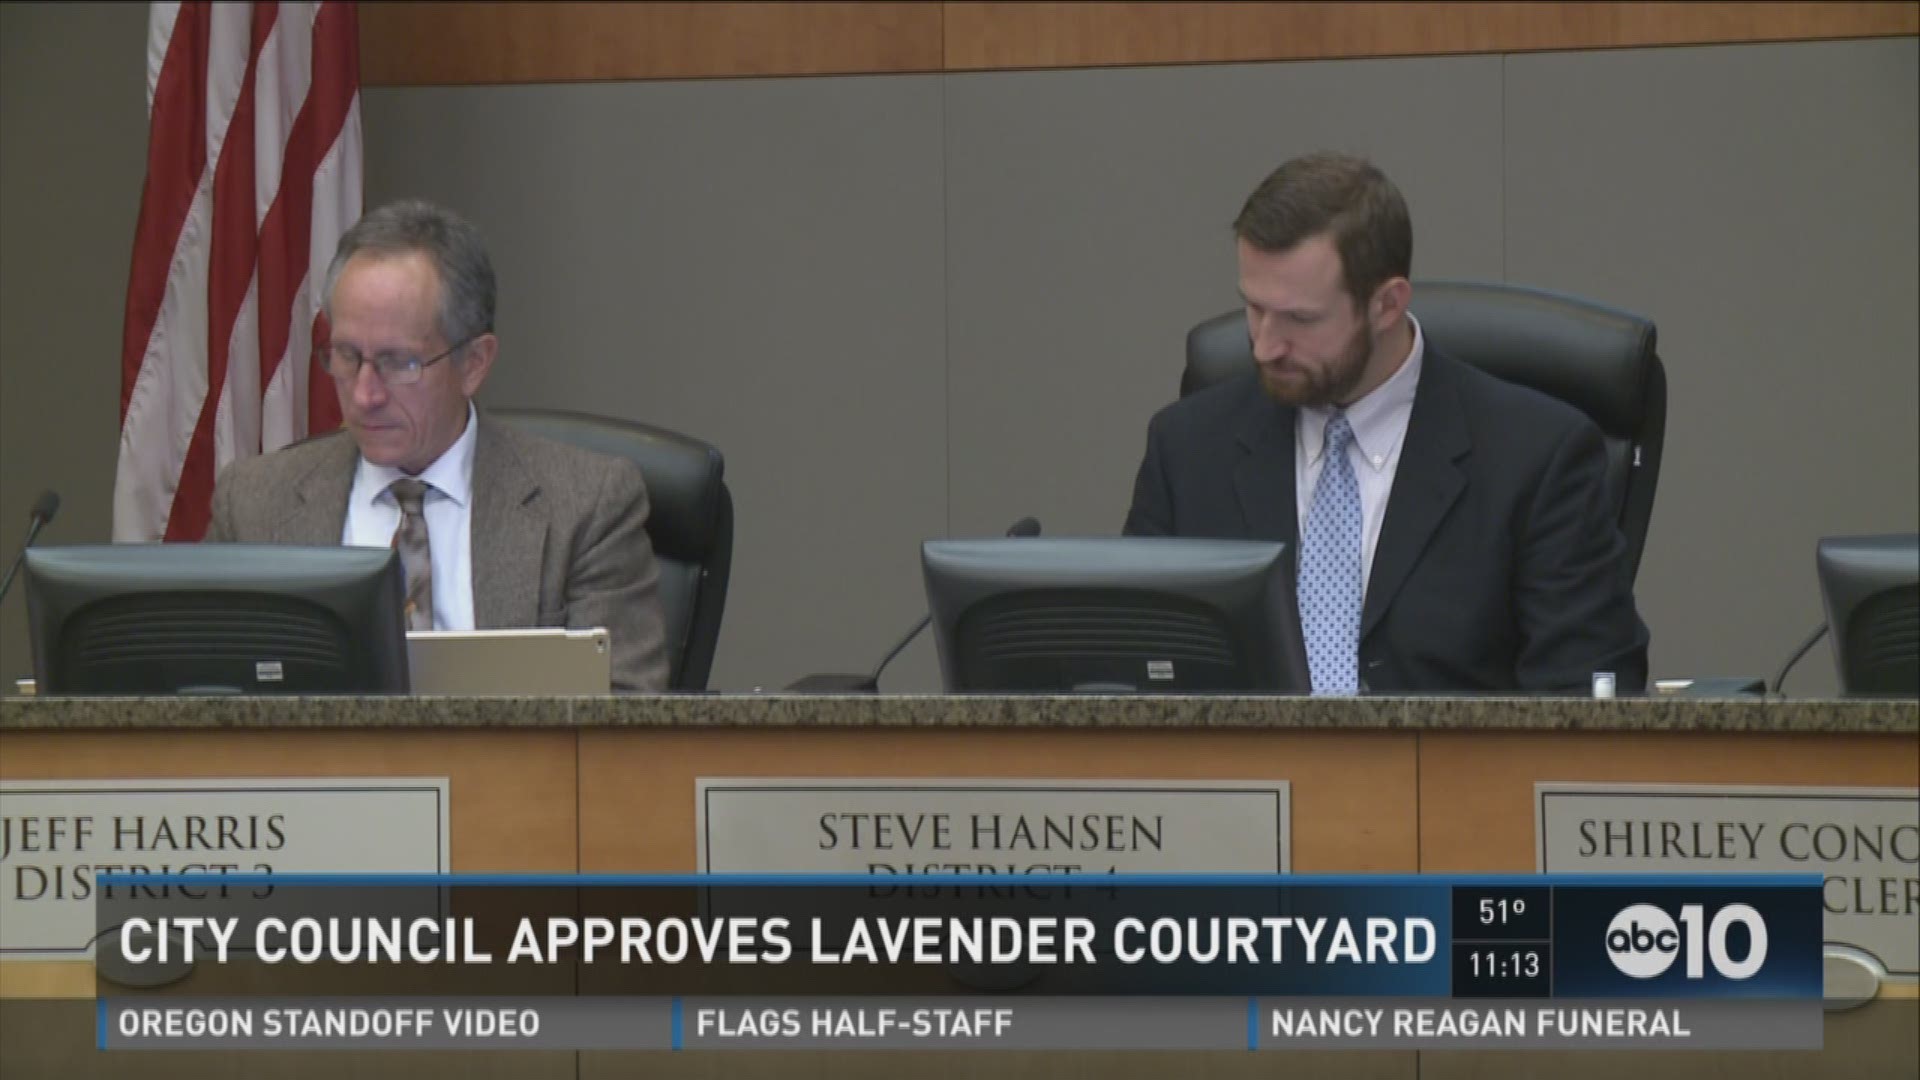 City council approves lavender courtyard